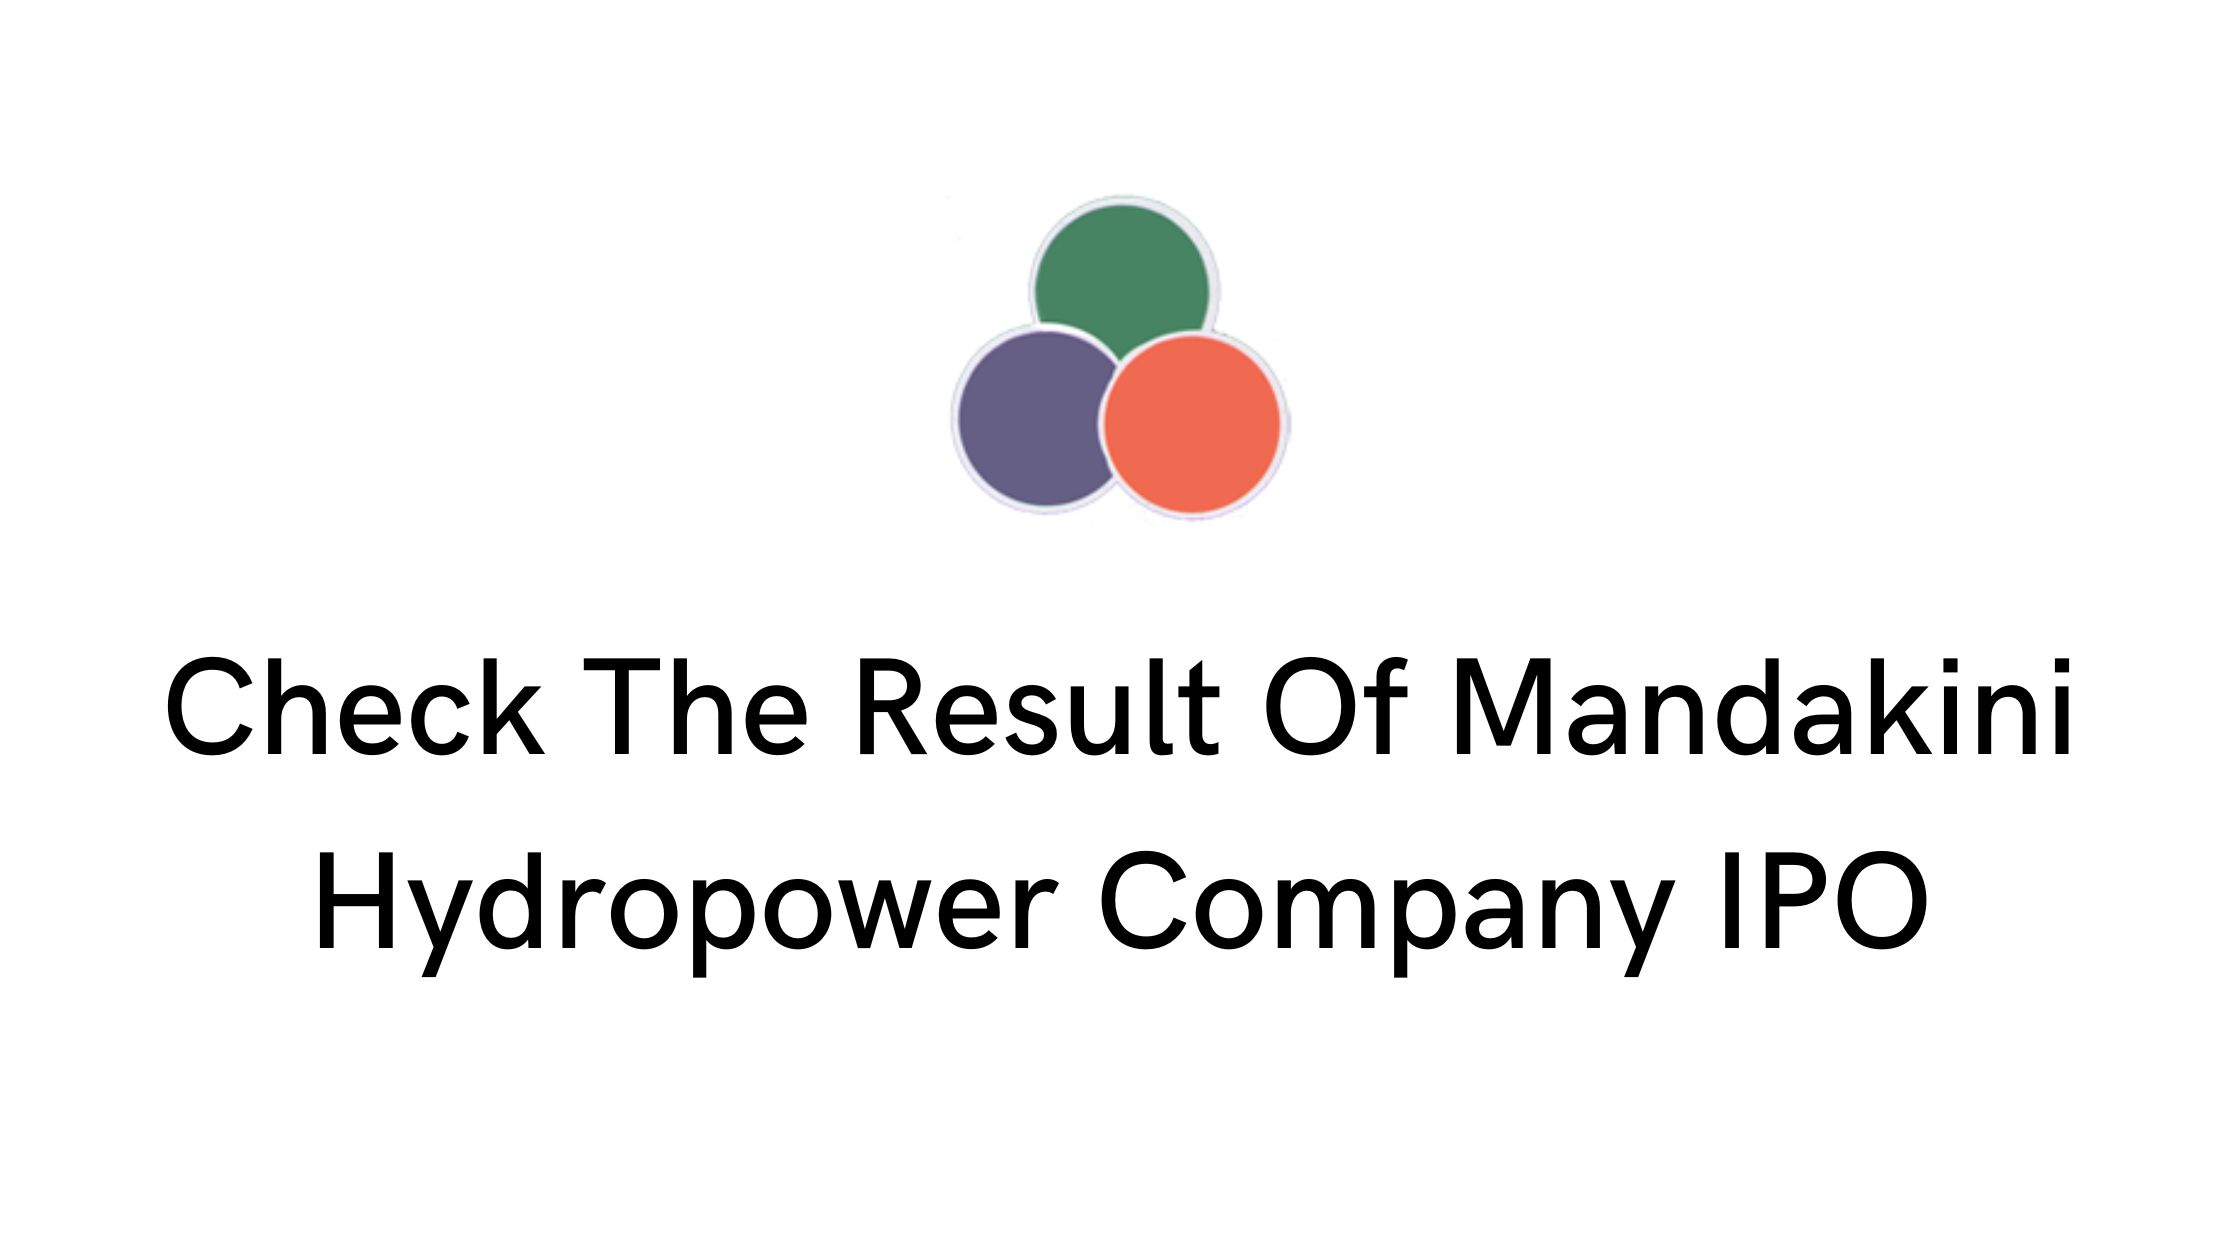 Check The Result Of Mandakini Hydropower Company IPO